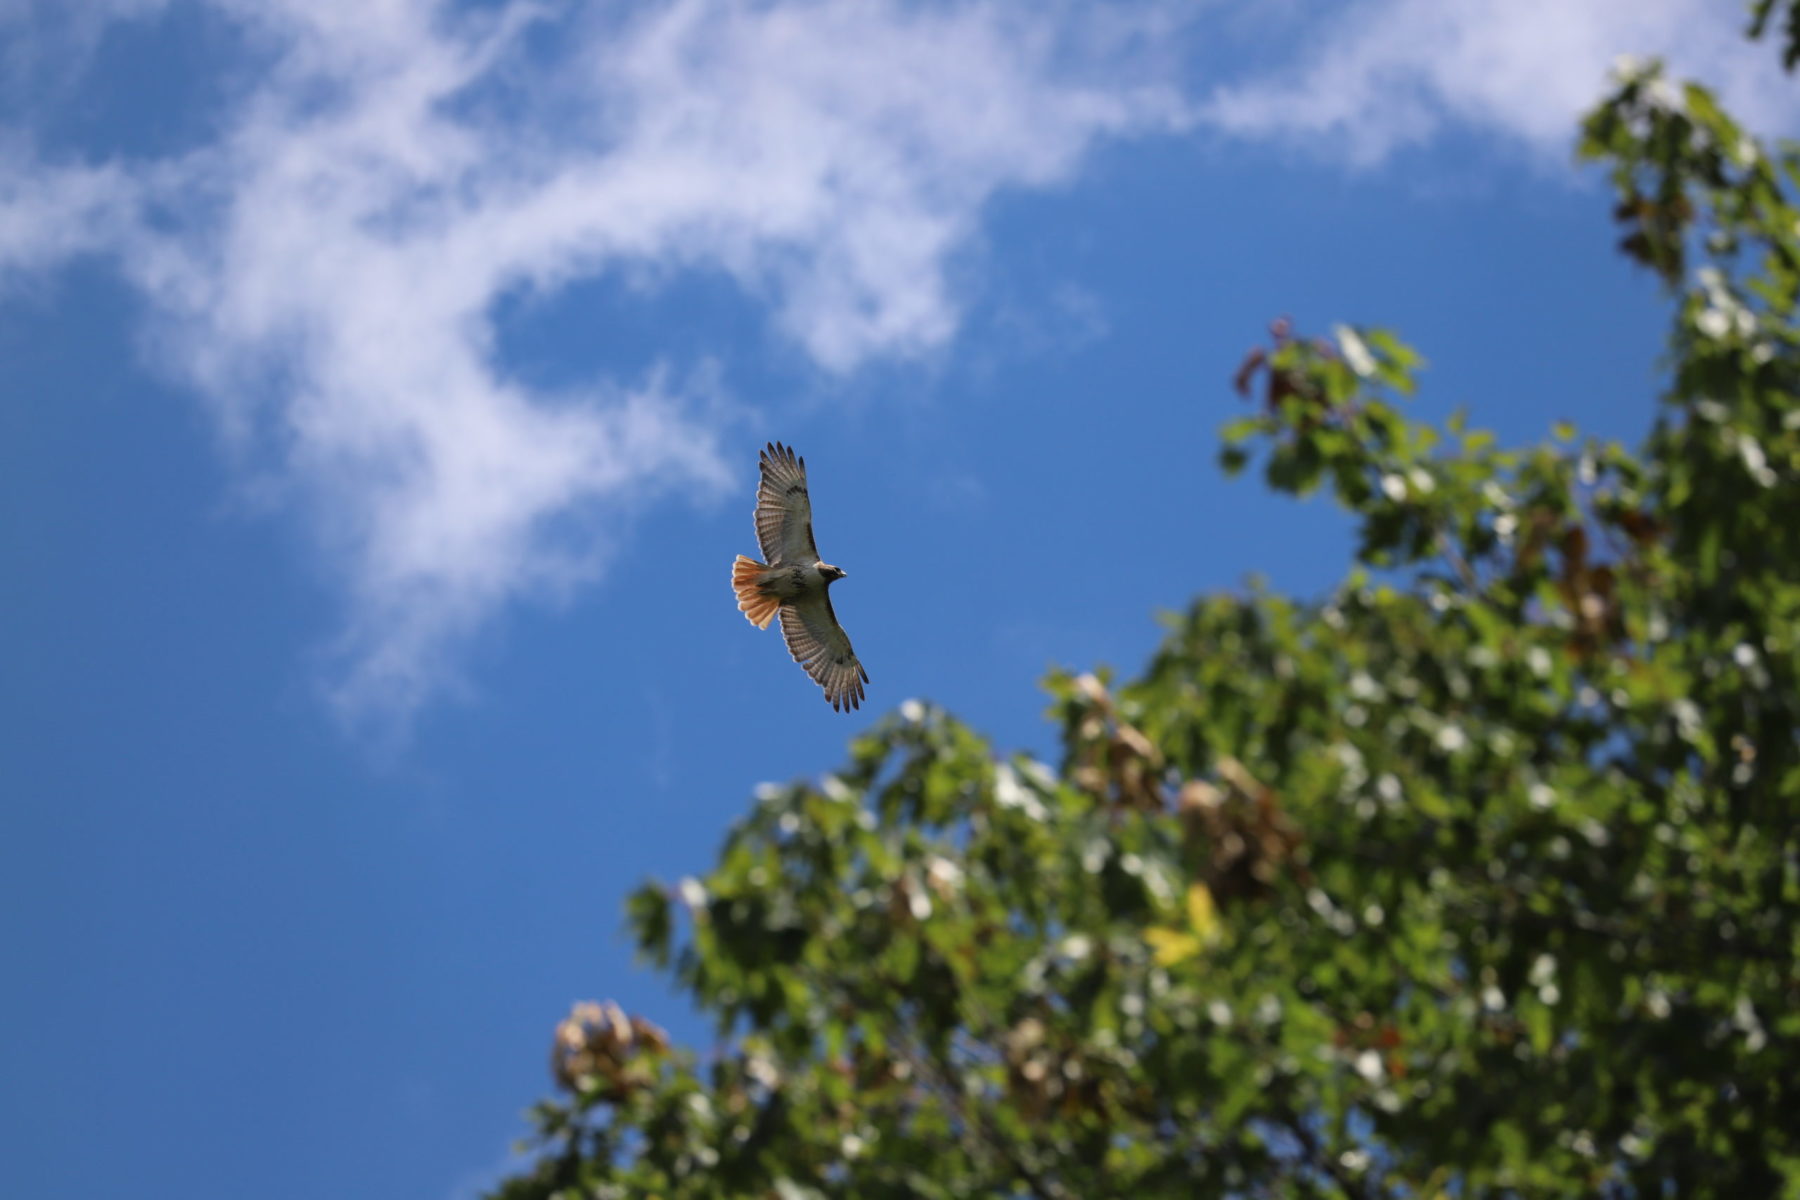 redtail hawk, flying in the sky